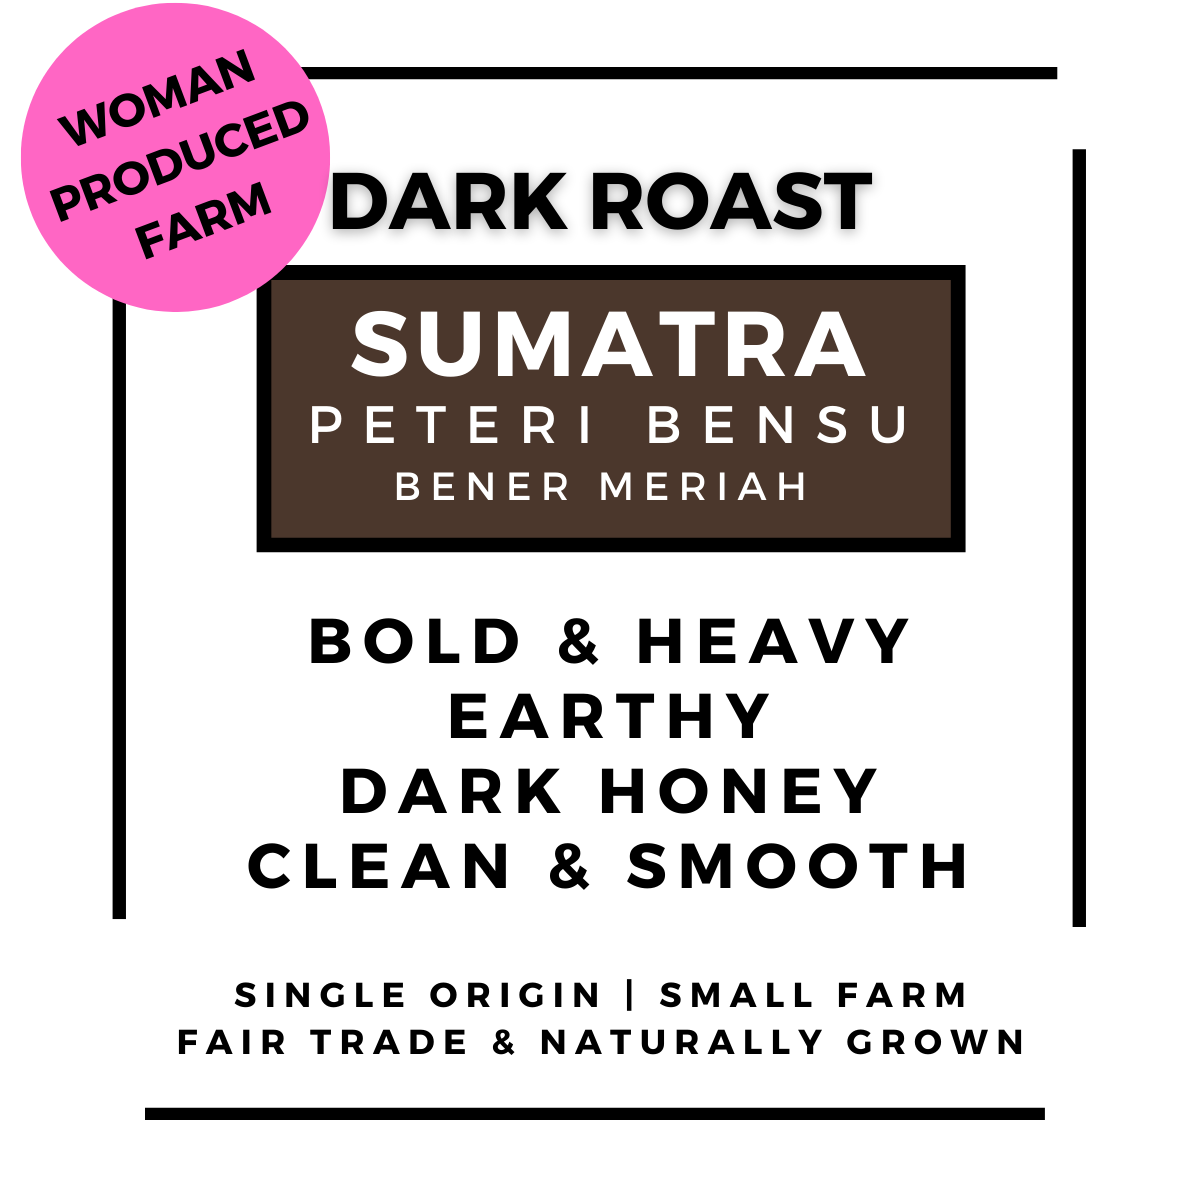 Sumatra - Peteri Bensu - Women's Produced